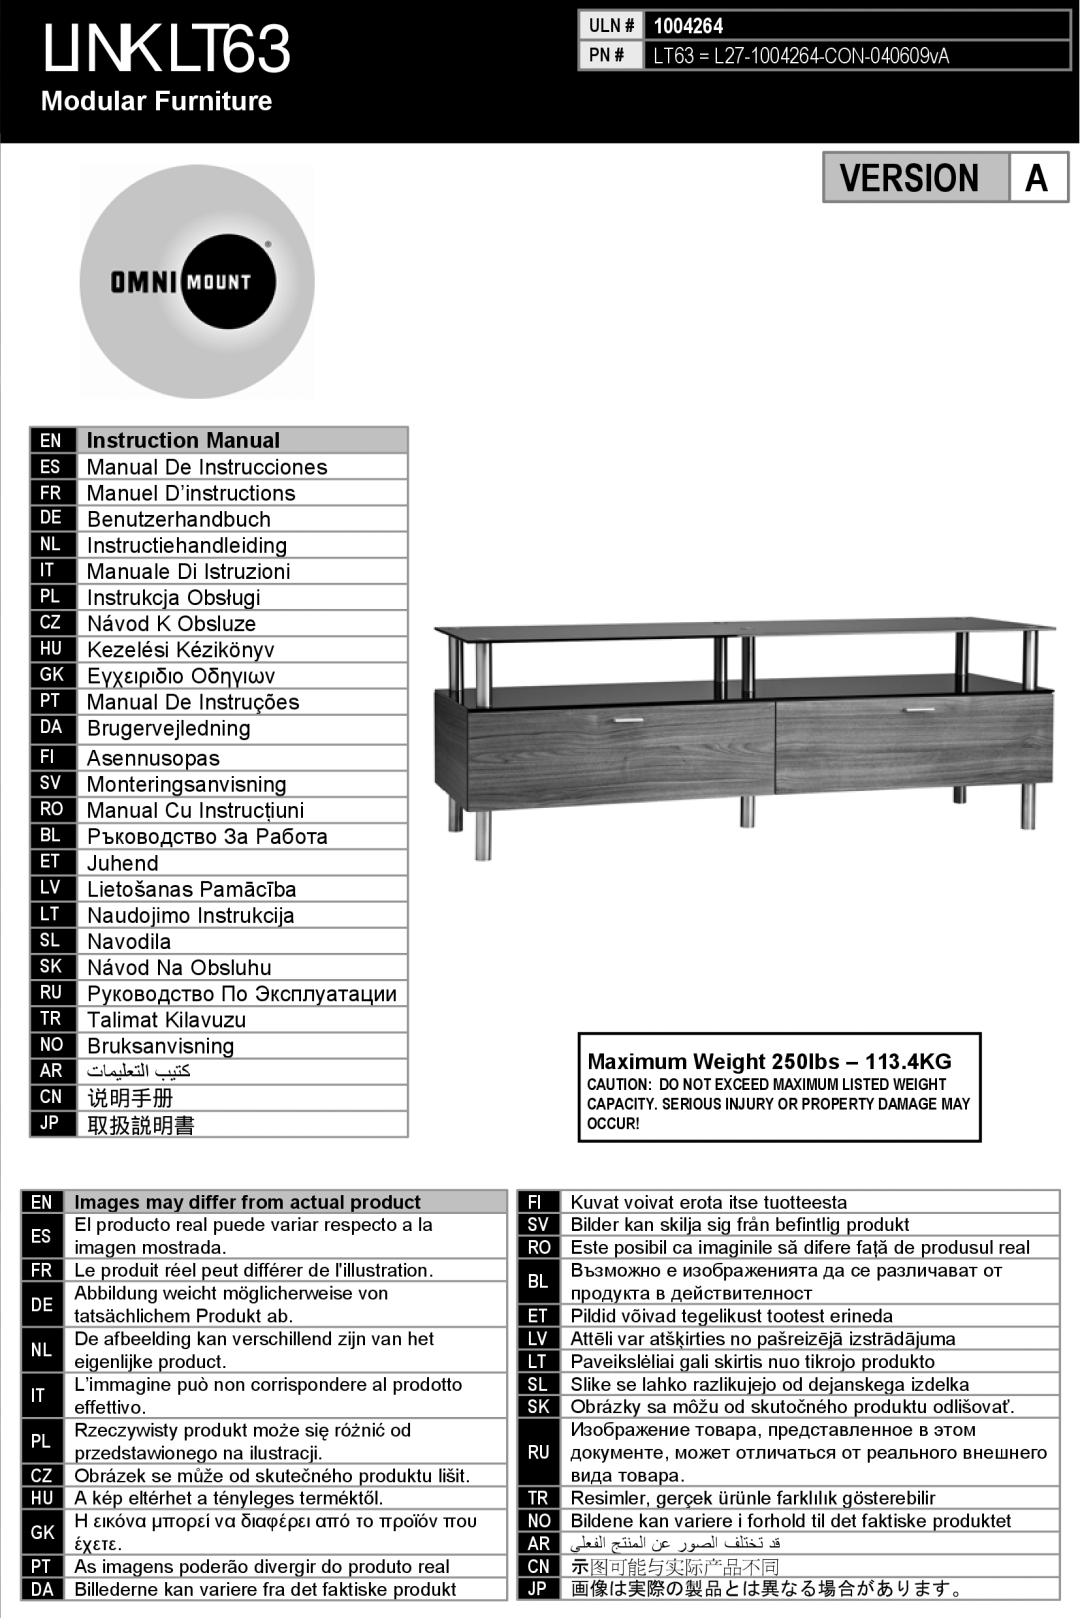 Omnimount 1004264 instruction manual Modular Furniture, 取扱説明書, LINK LT63, Version A, 说明手册 